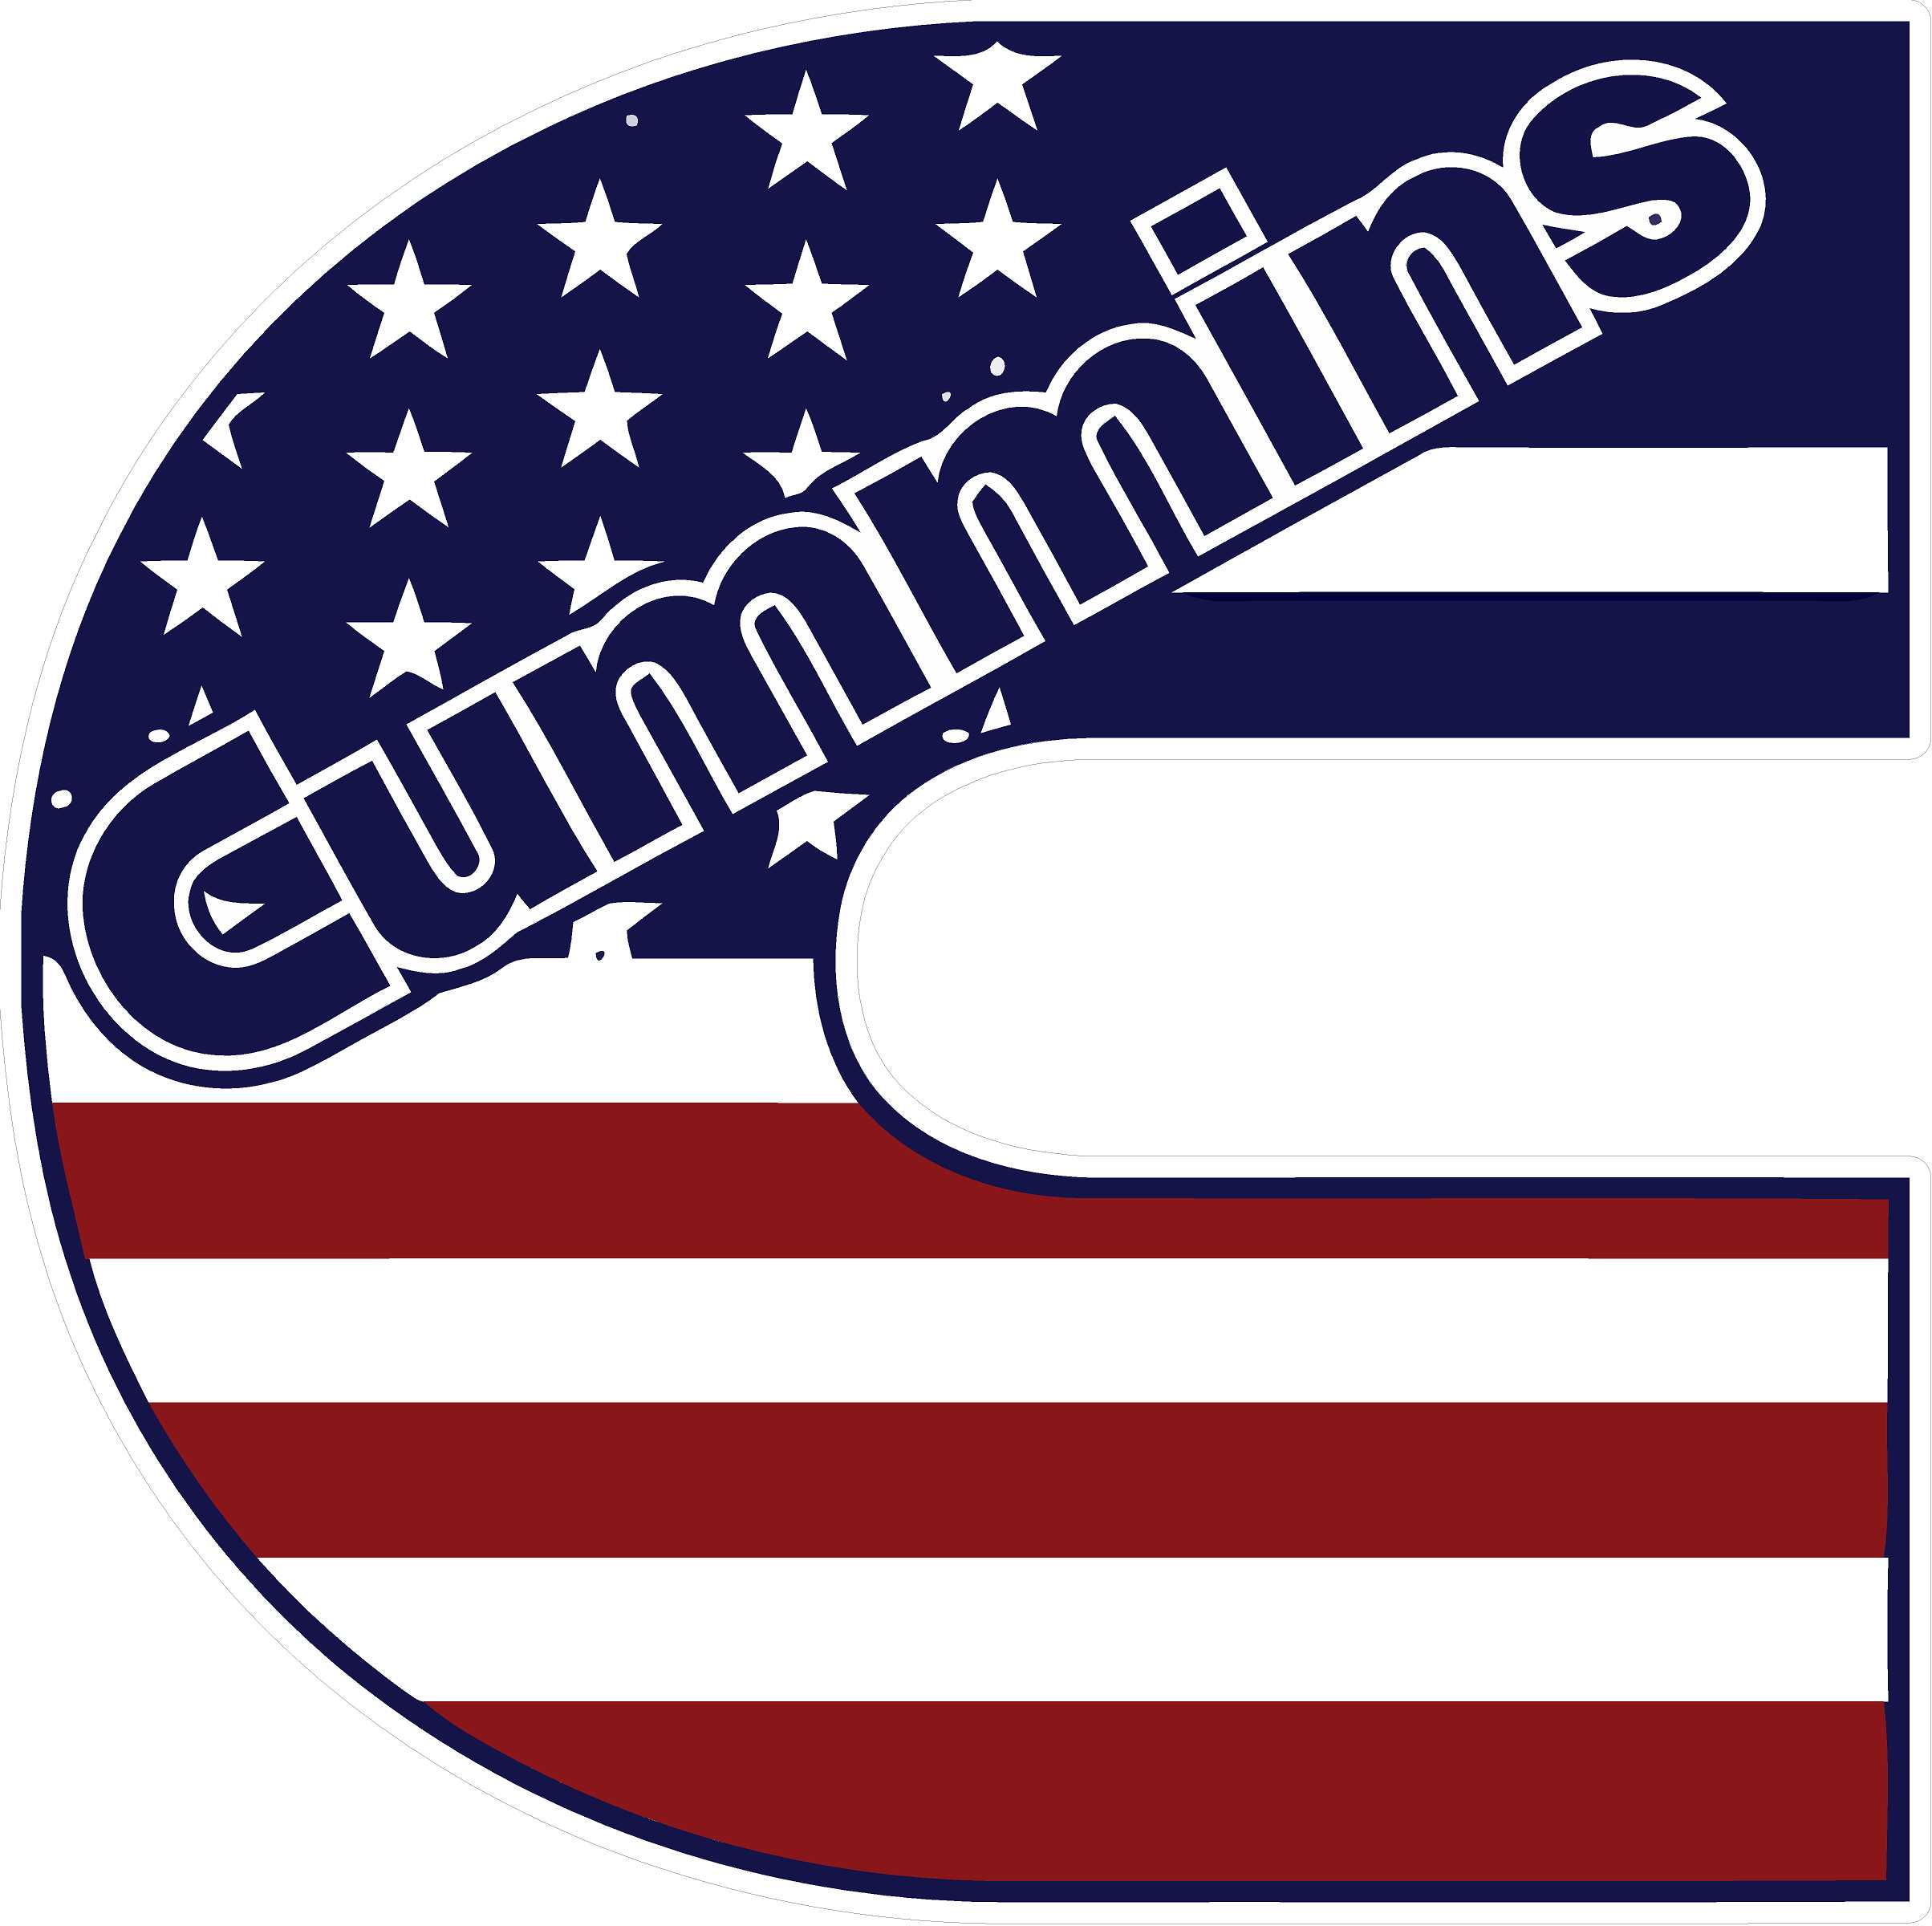 CUMMINS USA LOGO STICKER - Pro Sport Stickers